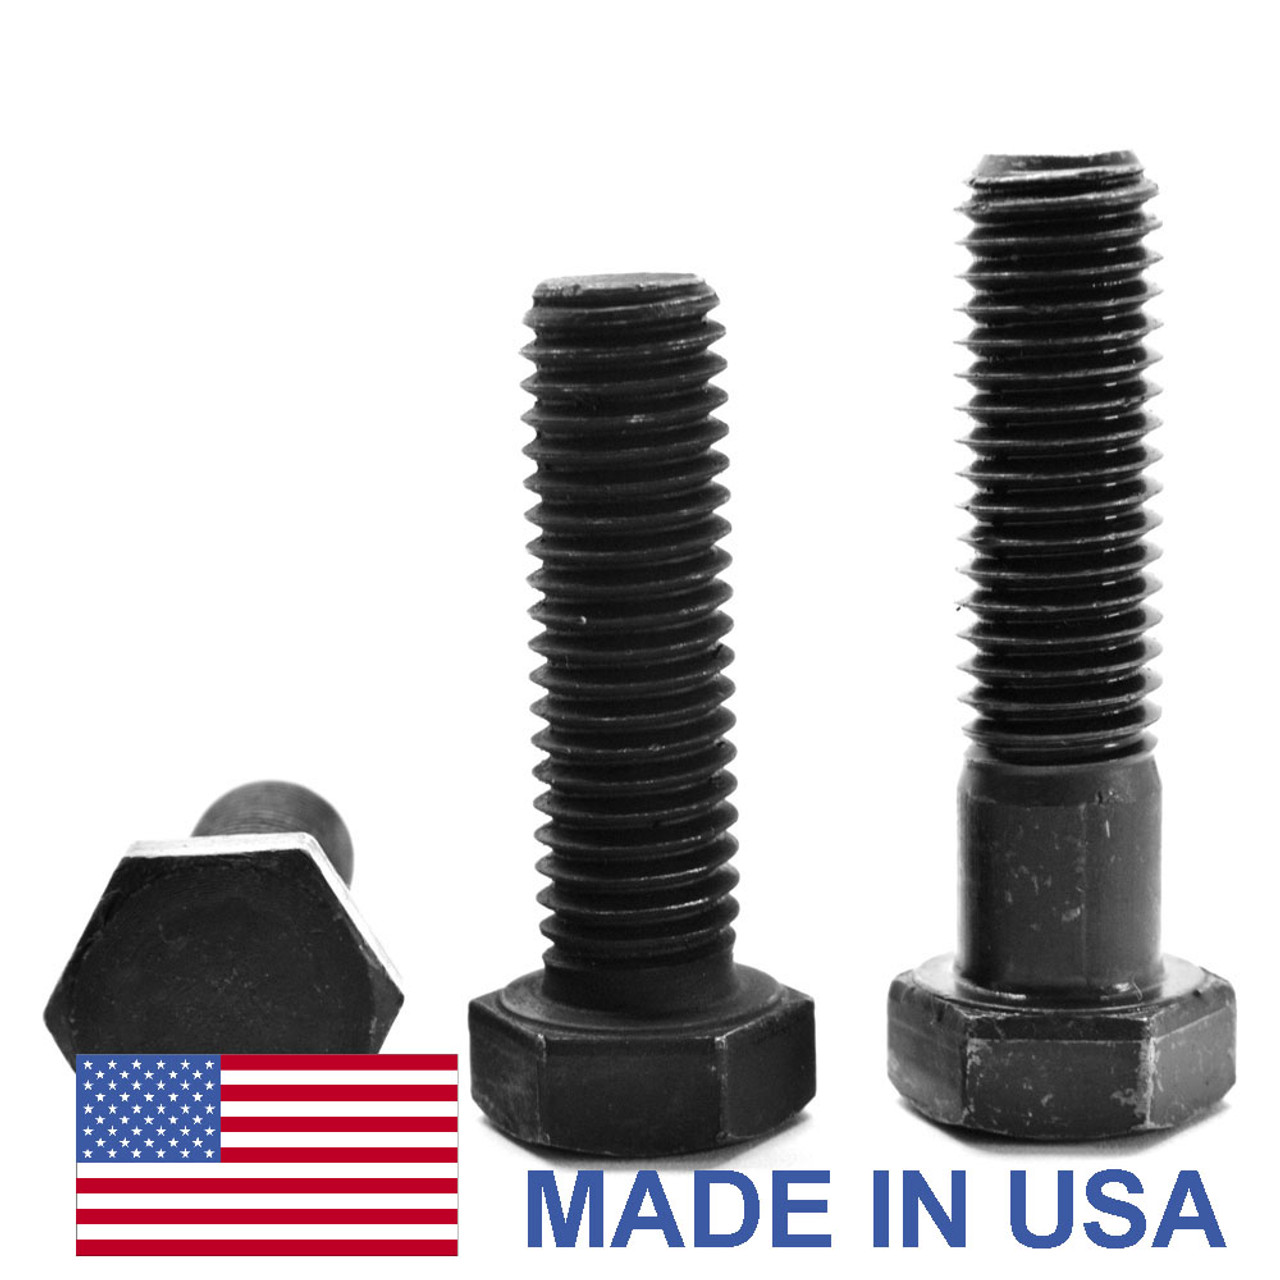 9/16"-12 x 1 1/4" (FT) Coarse Thread Grade 8 Hex Cap Screw (Bolt) - USA Alloy Steel Black Oxide